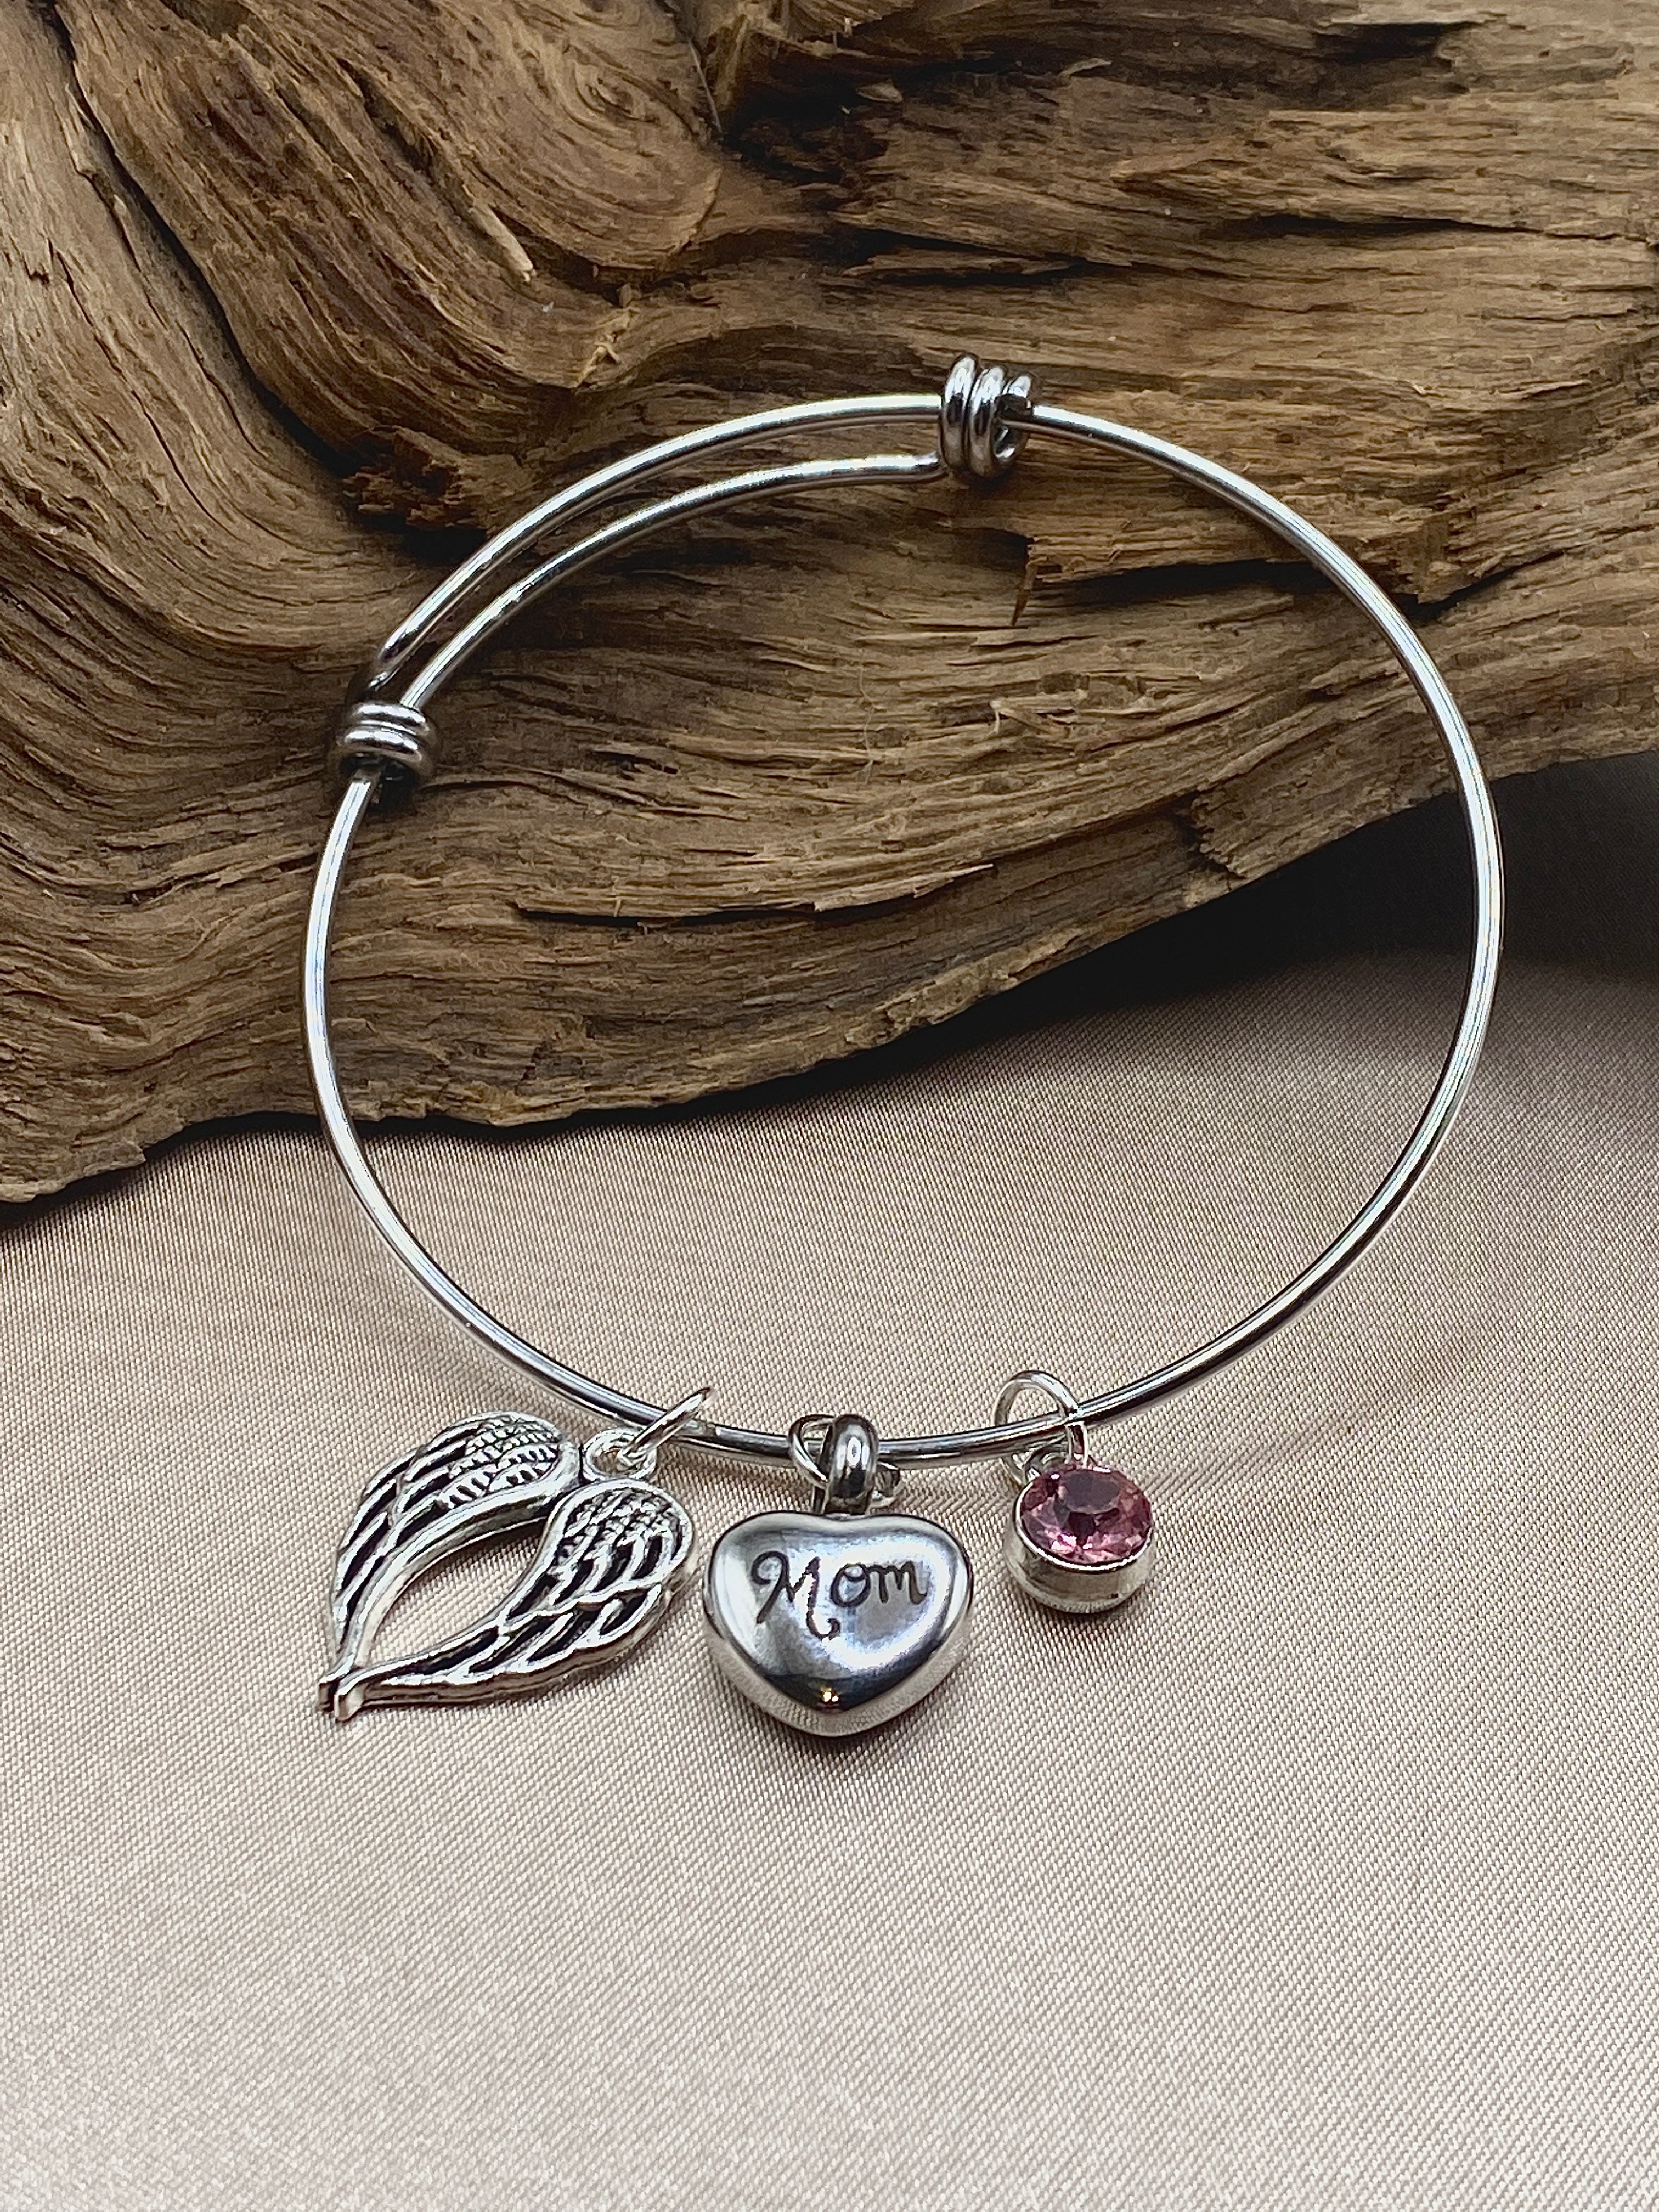 Your wings were ready, but my heart was not - Memorial Bracelet - Dad | eBay